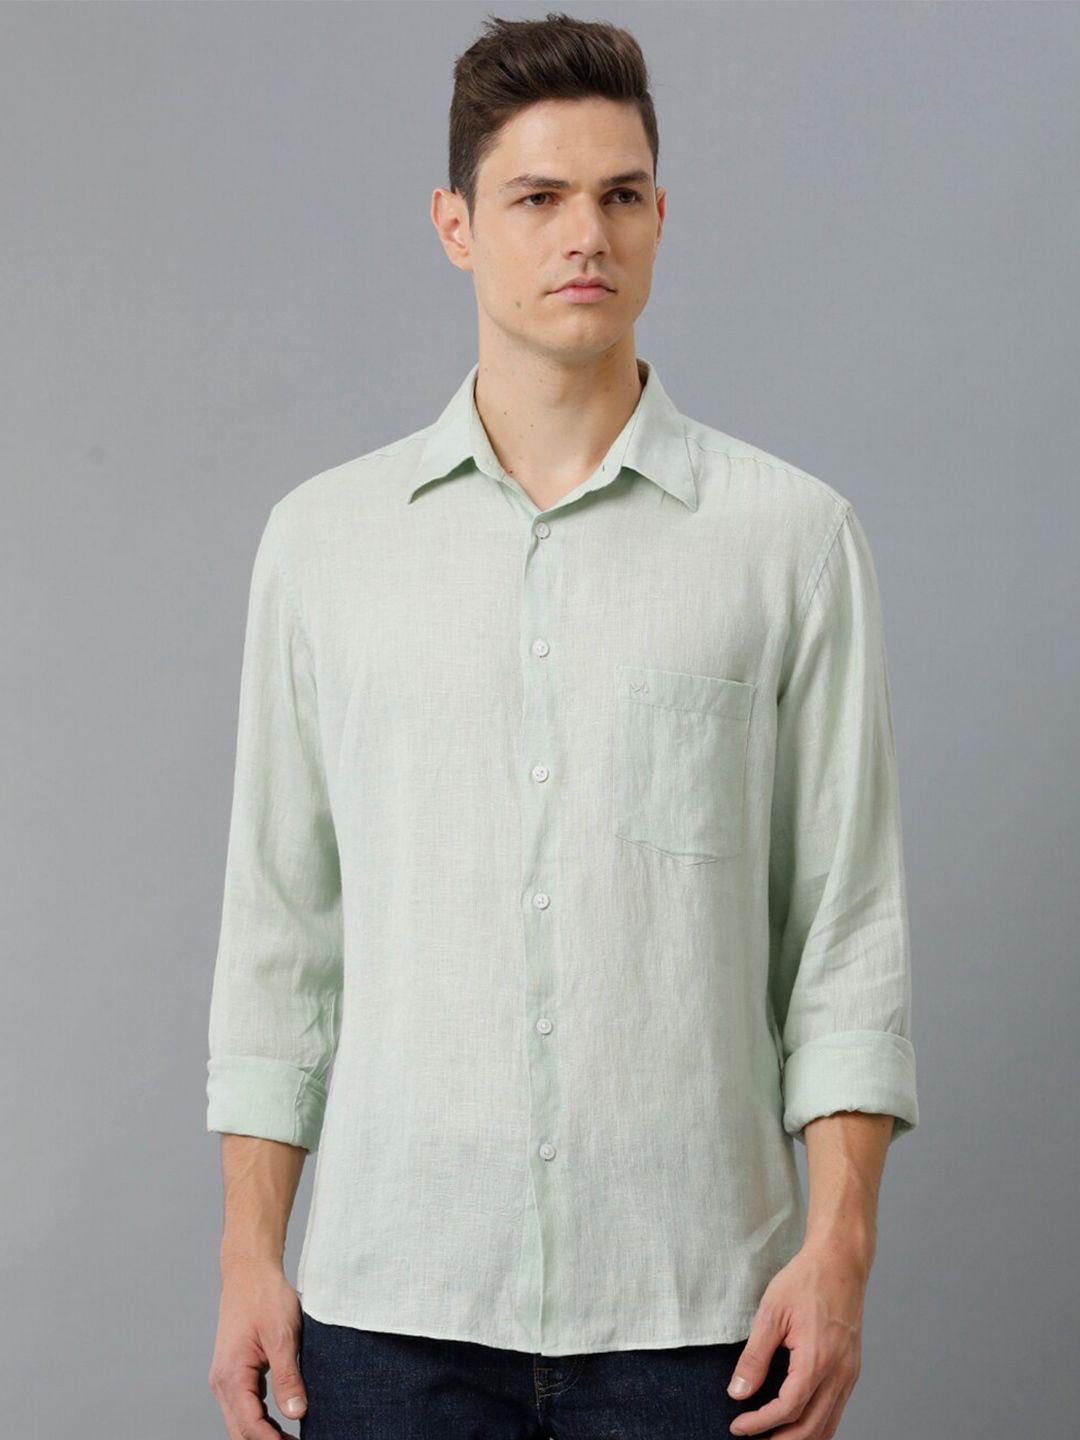 aldeno linen comfort opaque casual shirt